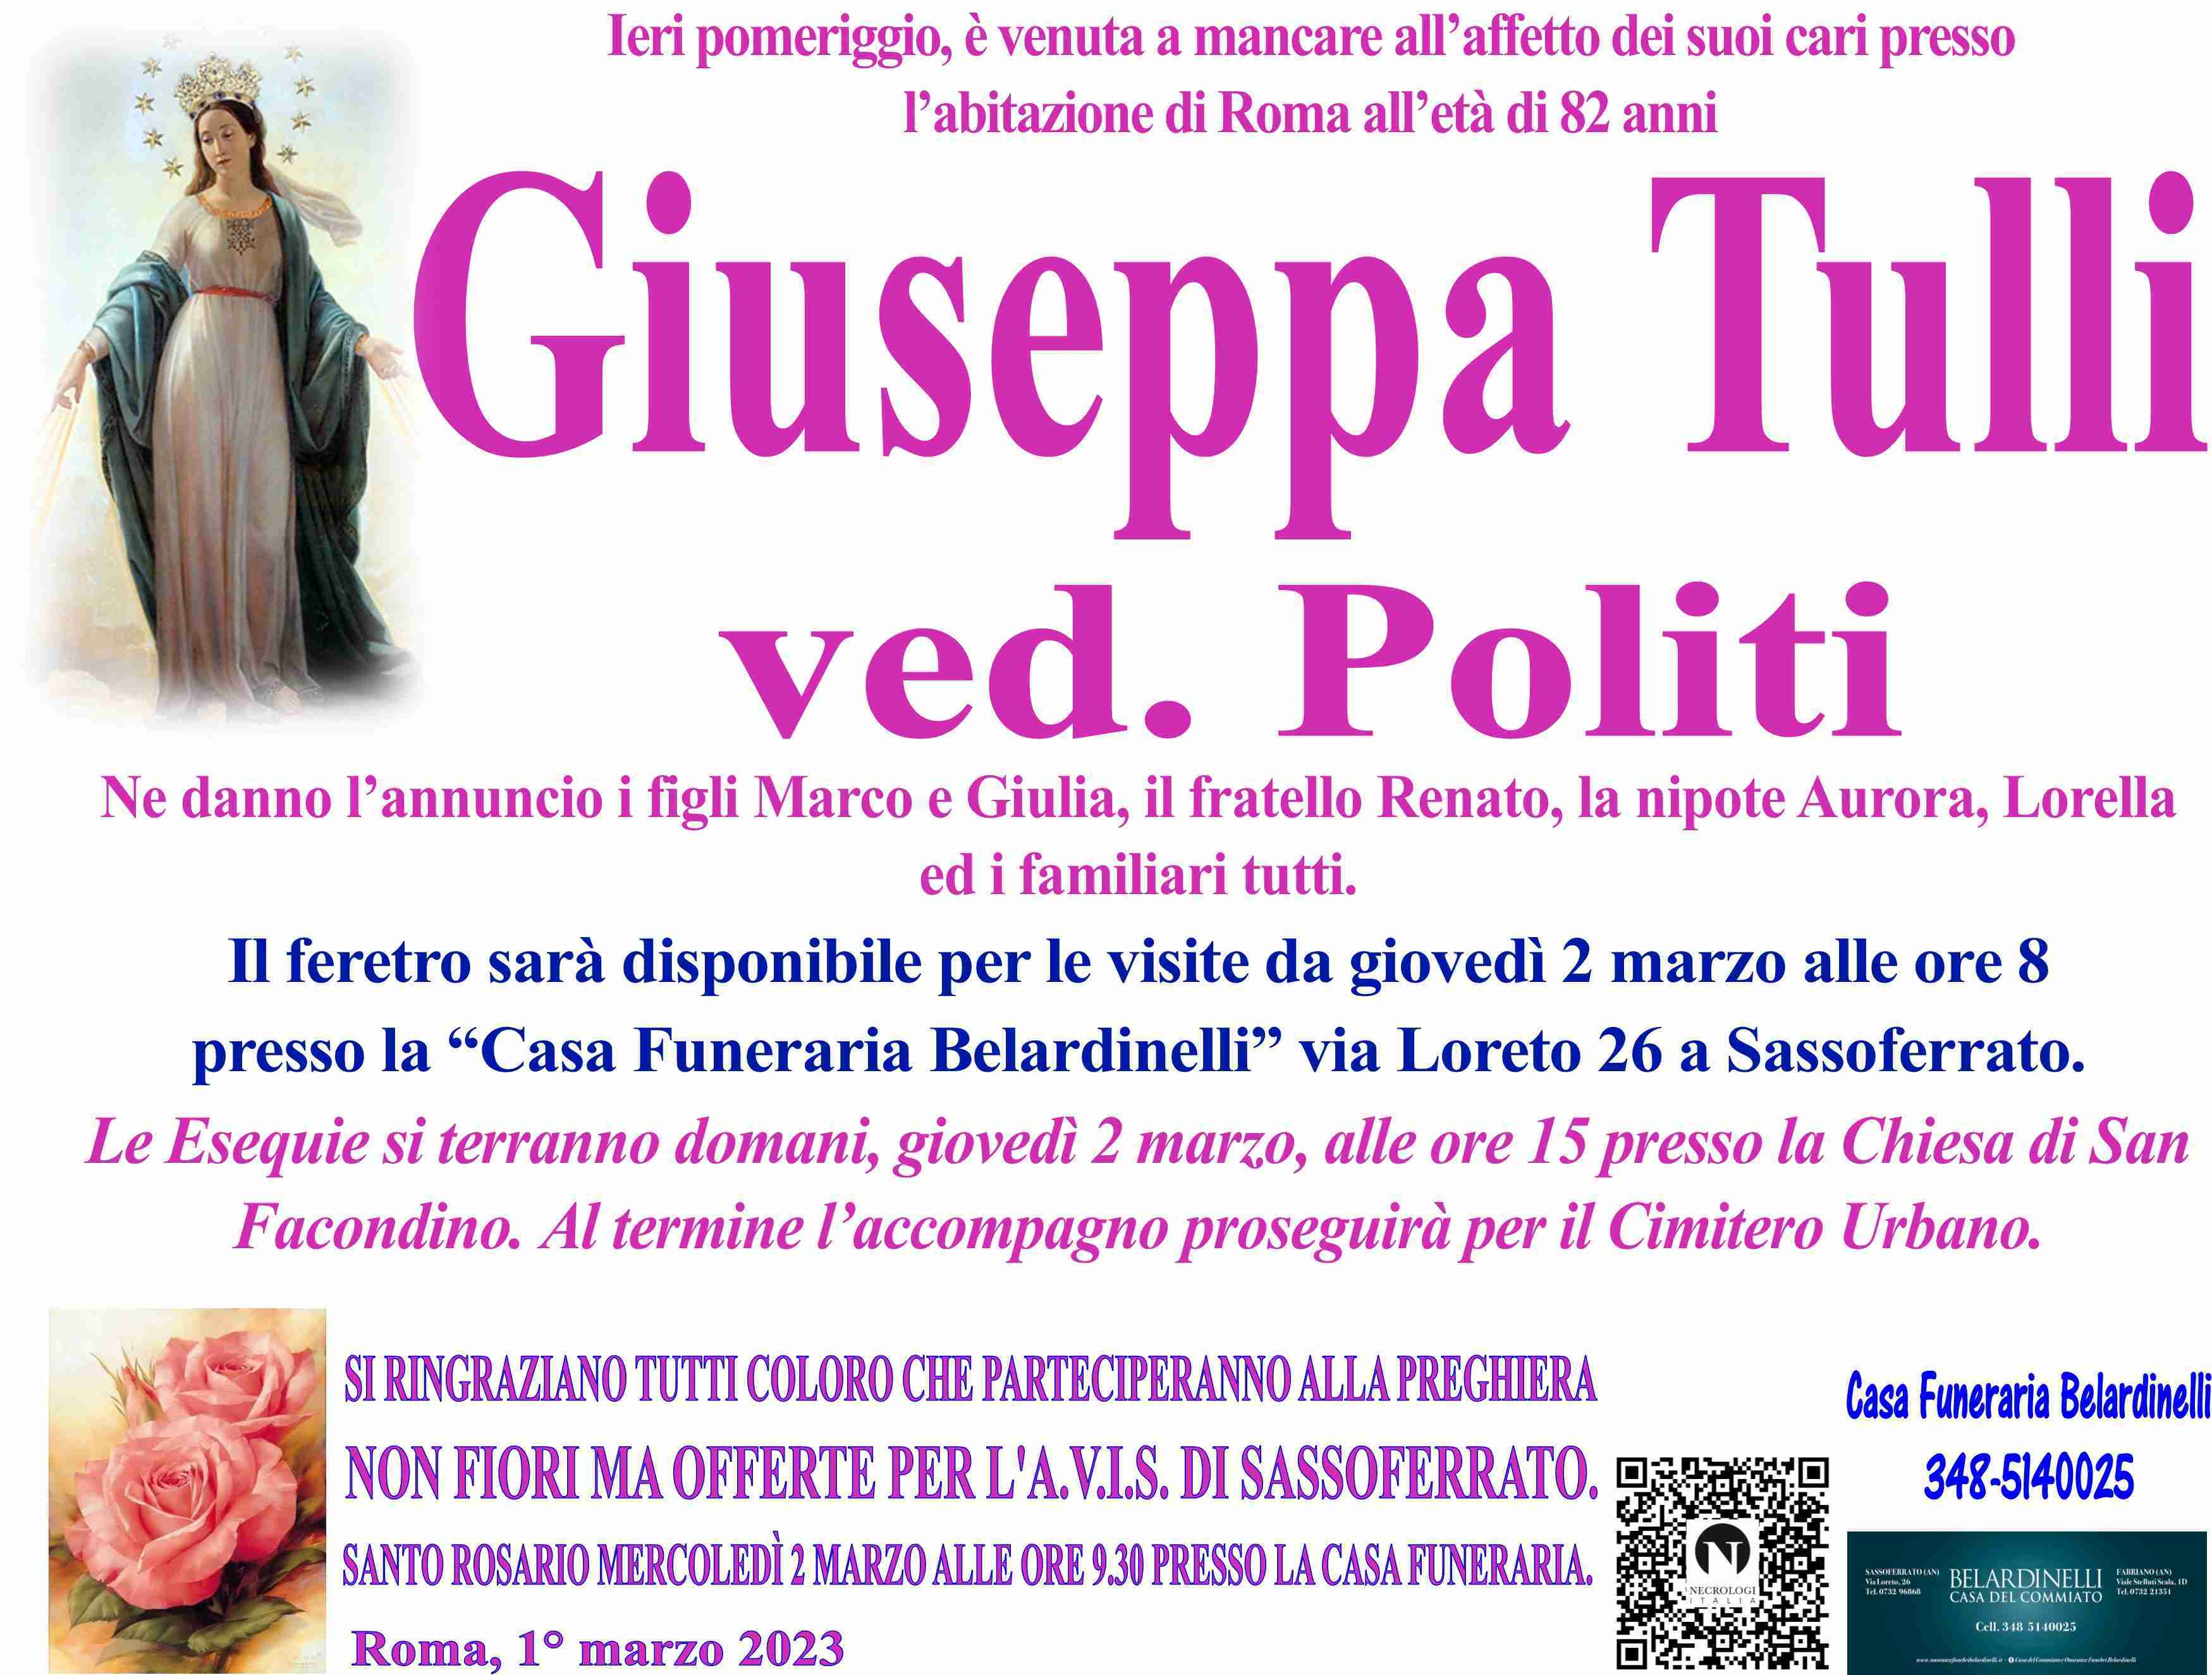 Giuseppa Tulli